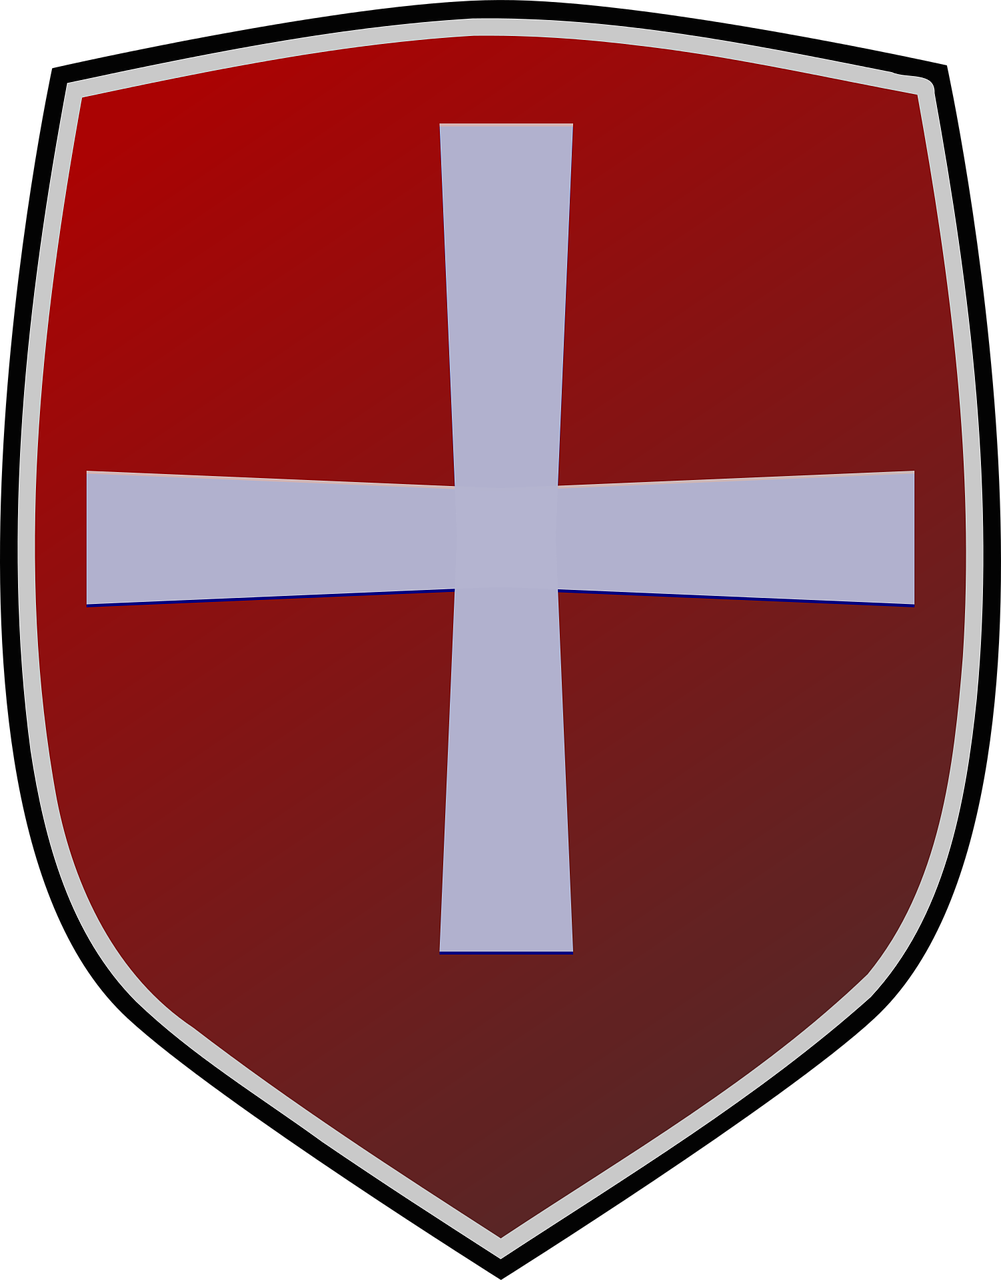 Badge Shield Cross Emblem